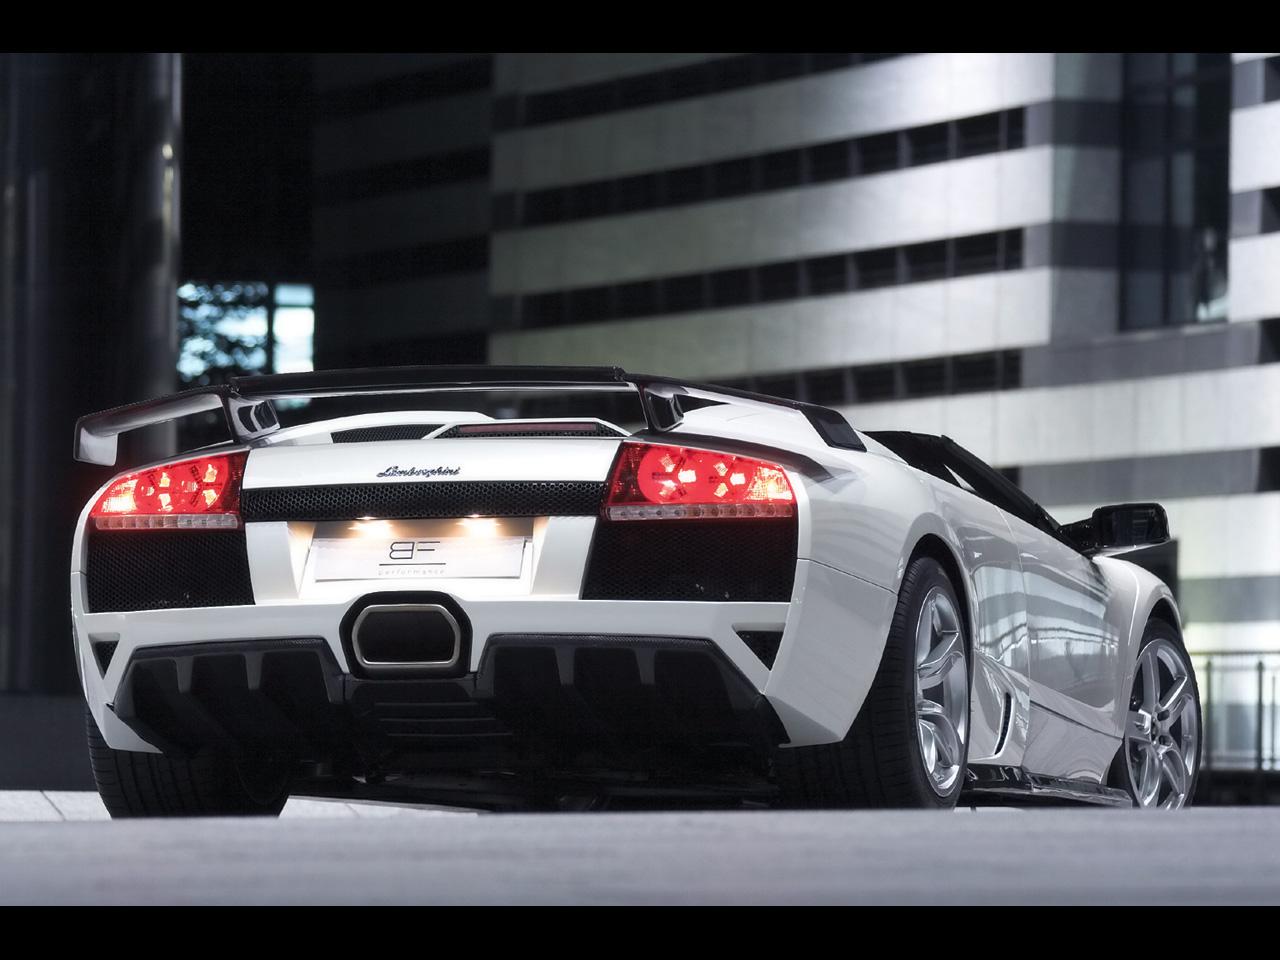 Lamborghini Murcielago: Wallpaper for your desktop pleasure